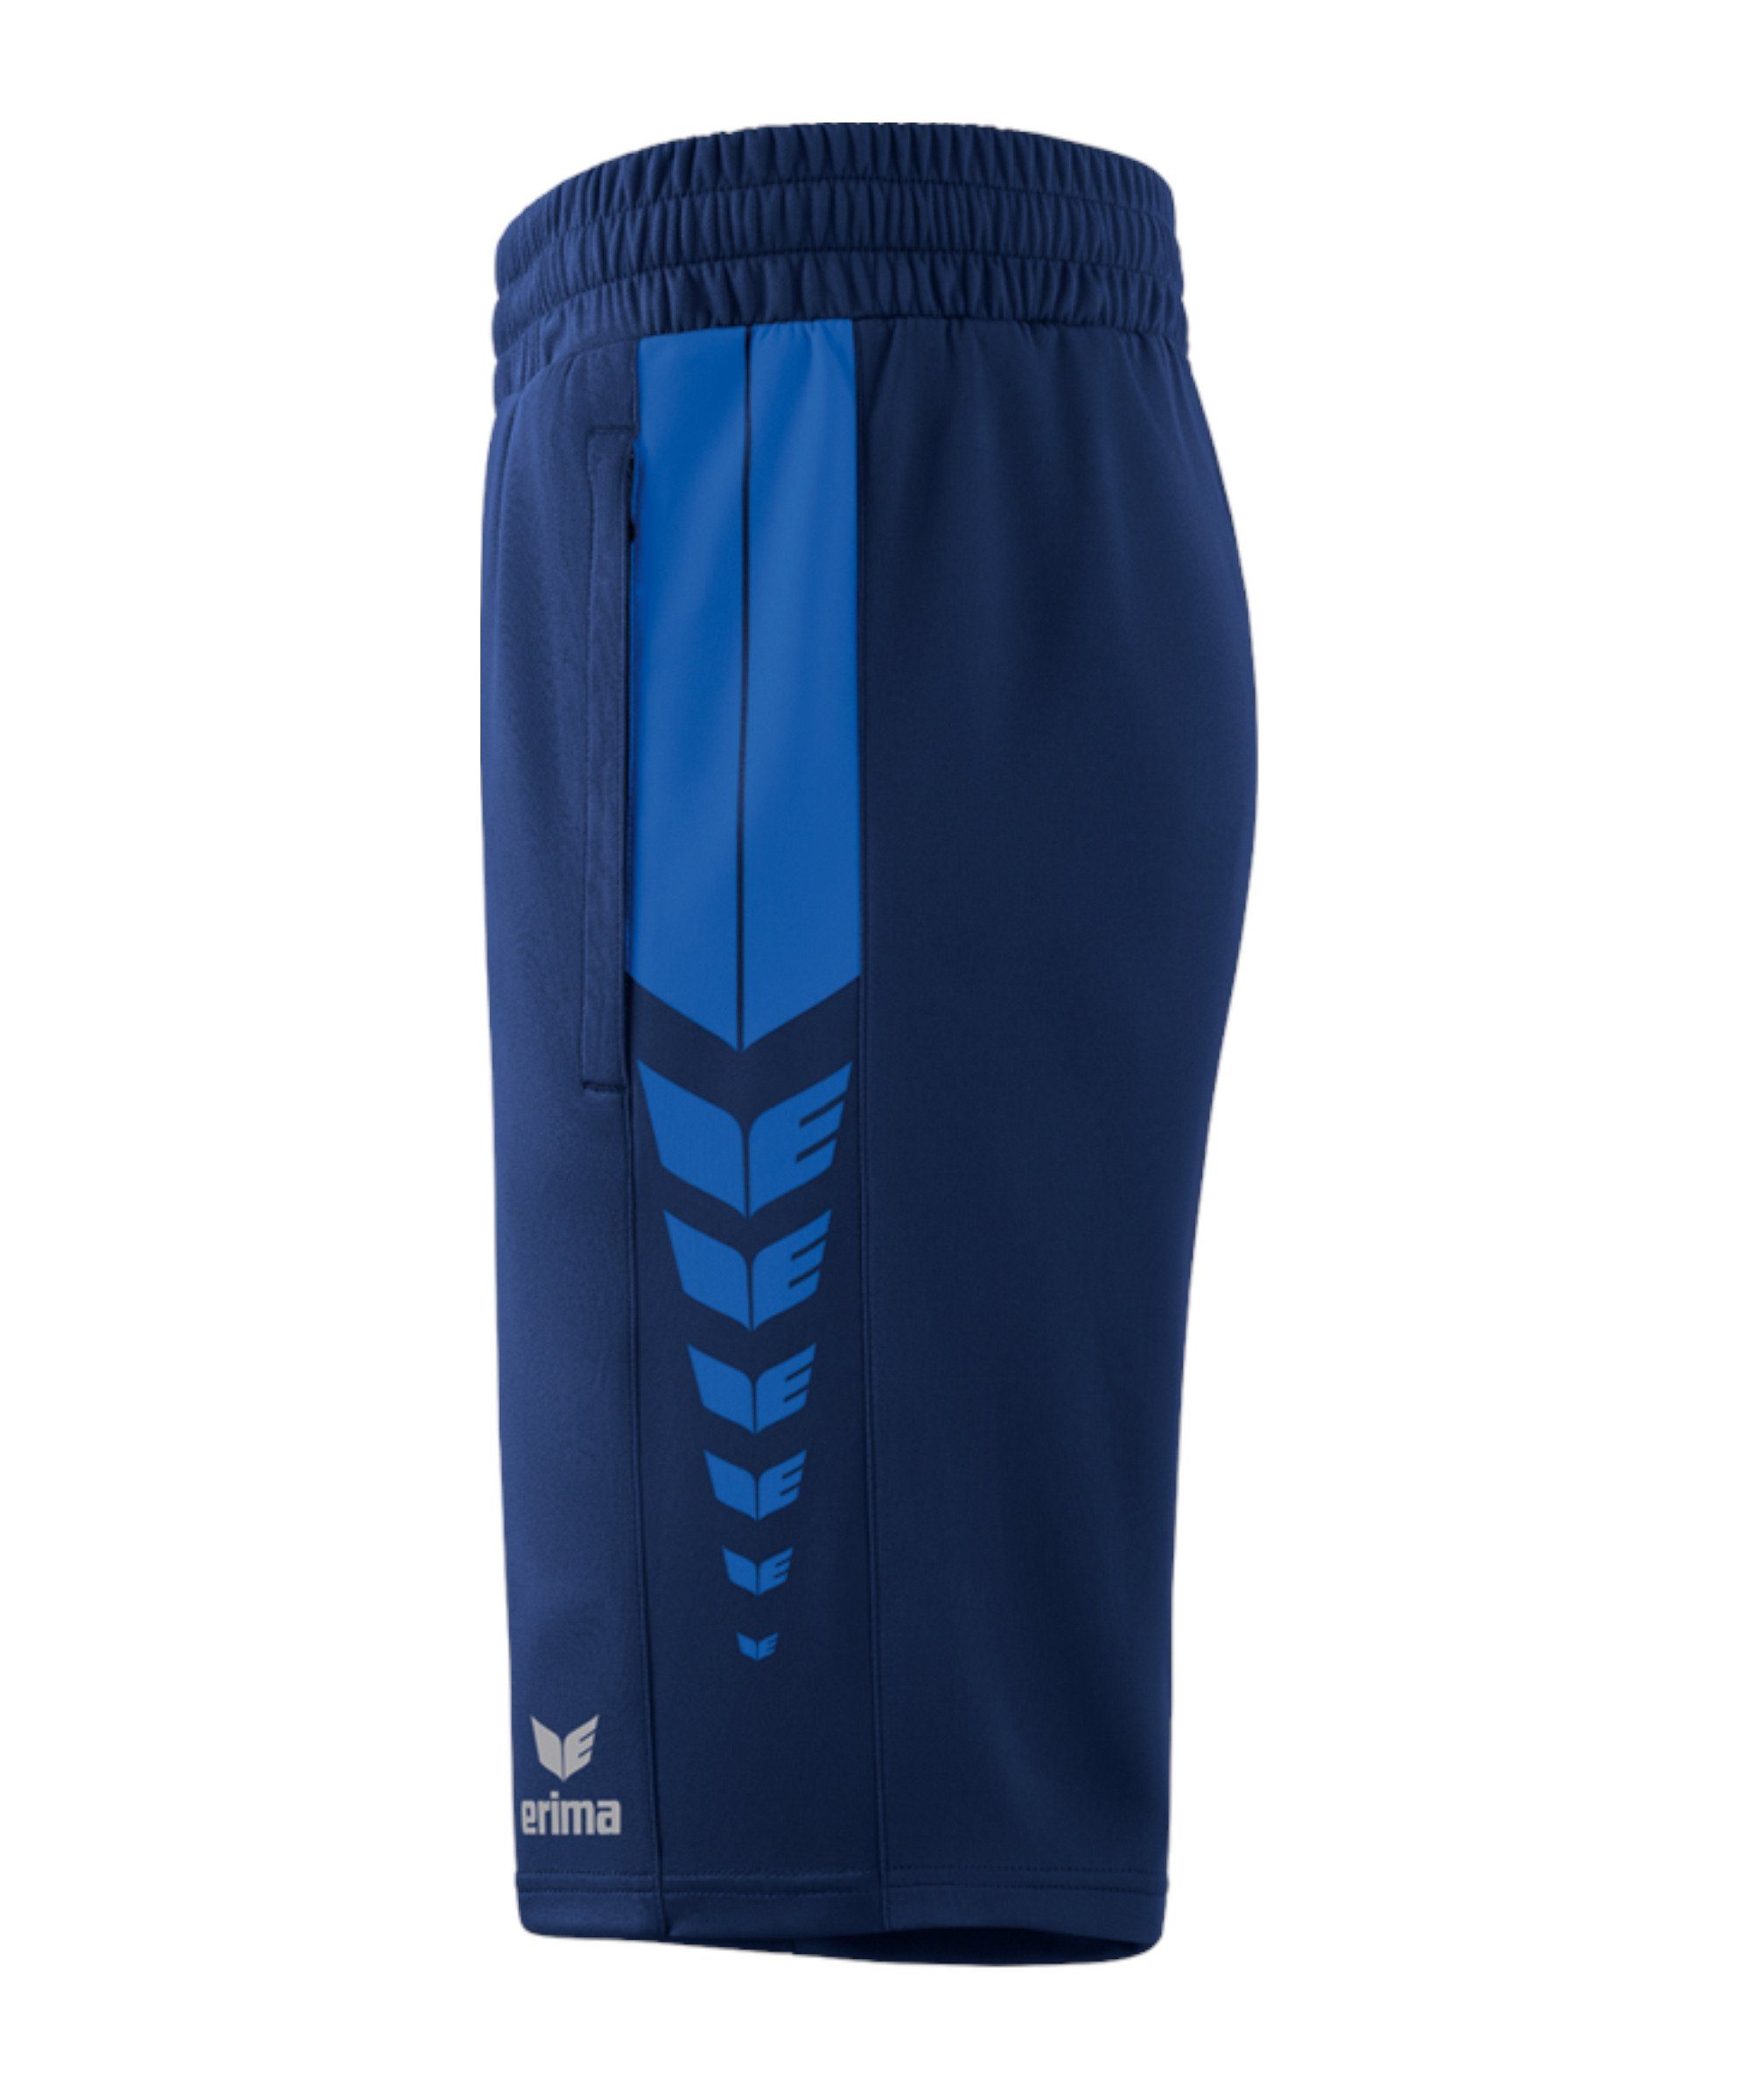 Short Erima Sporthose WINGS SIX blau